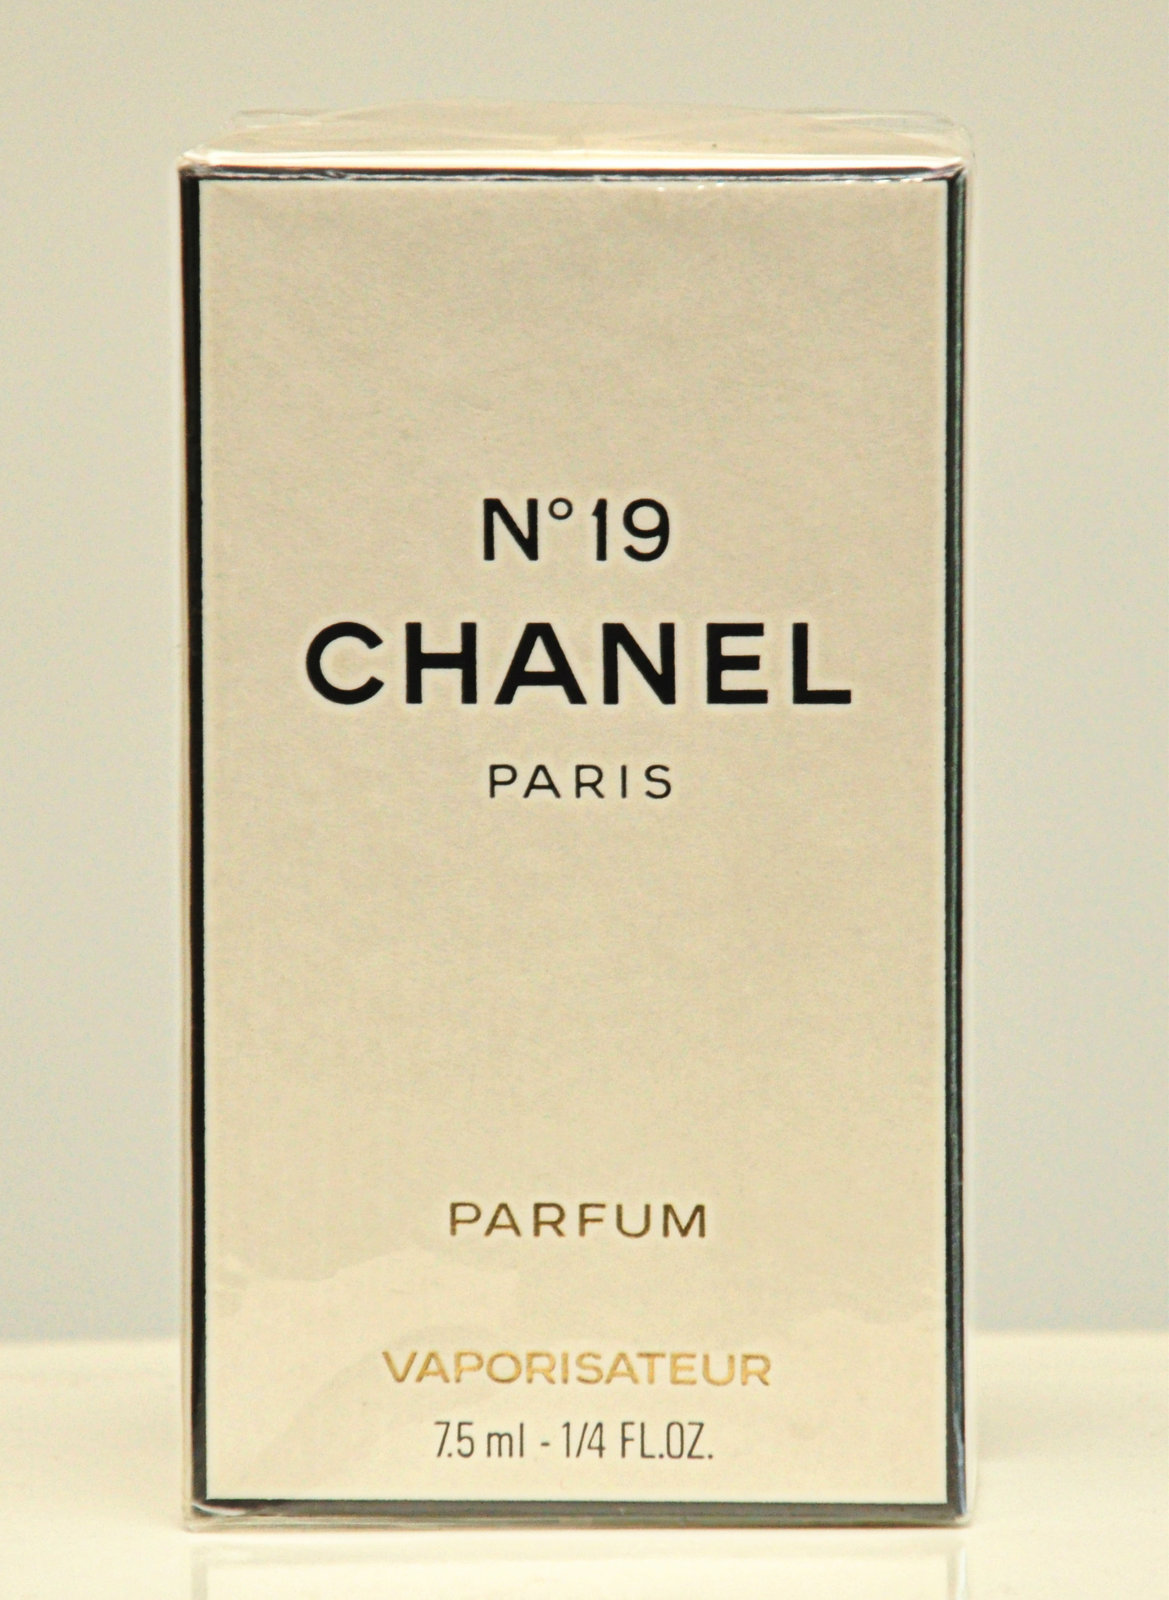 Chanel No 19 Parfum by Chanel 7,5ml 1/4 Fl. Oz. Spray Pure Perfume Woman Old 80" - $399.90